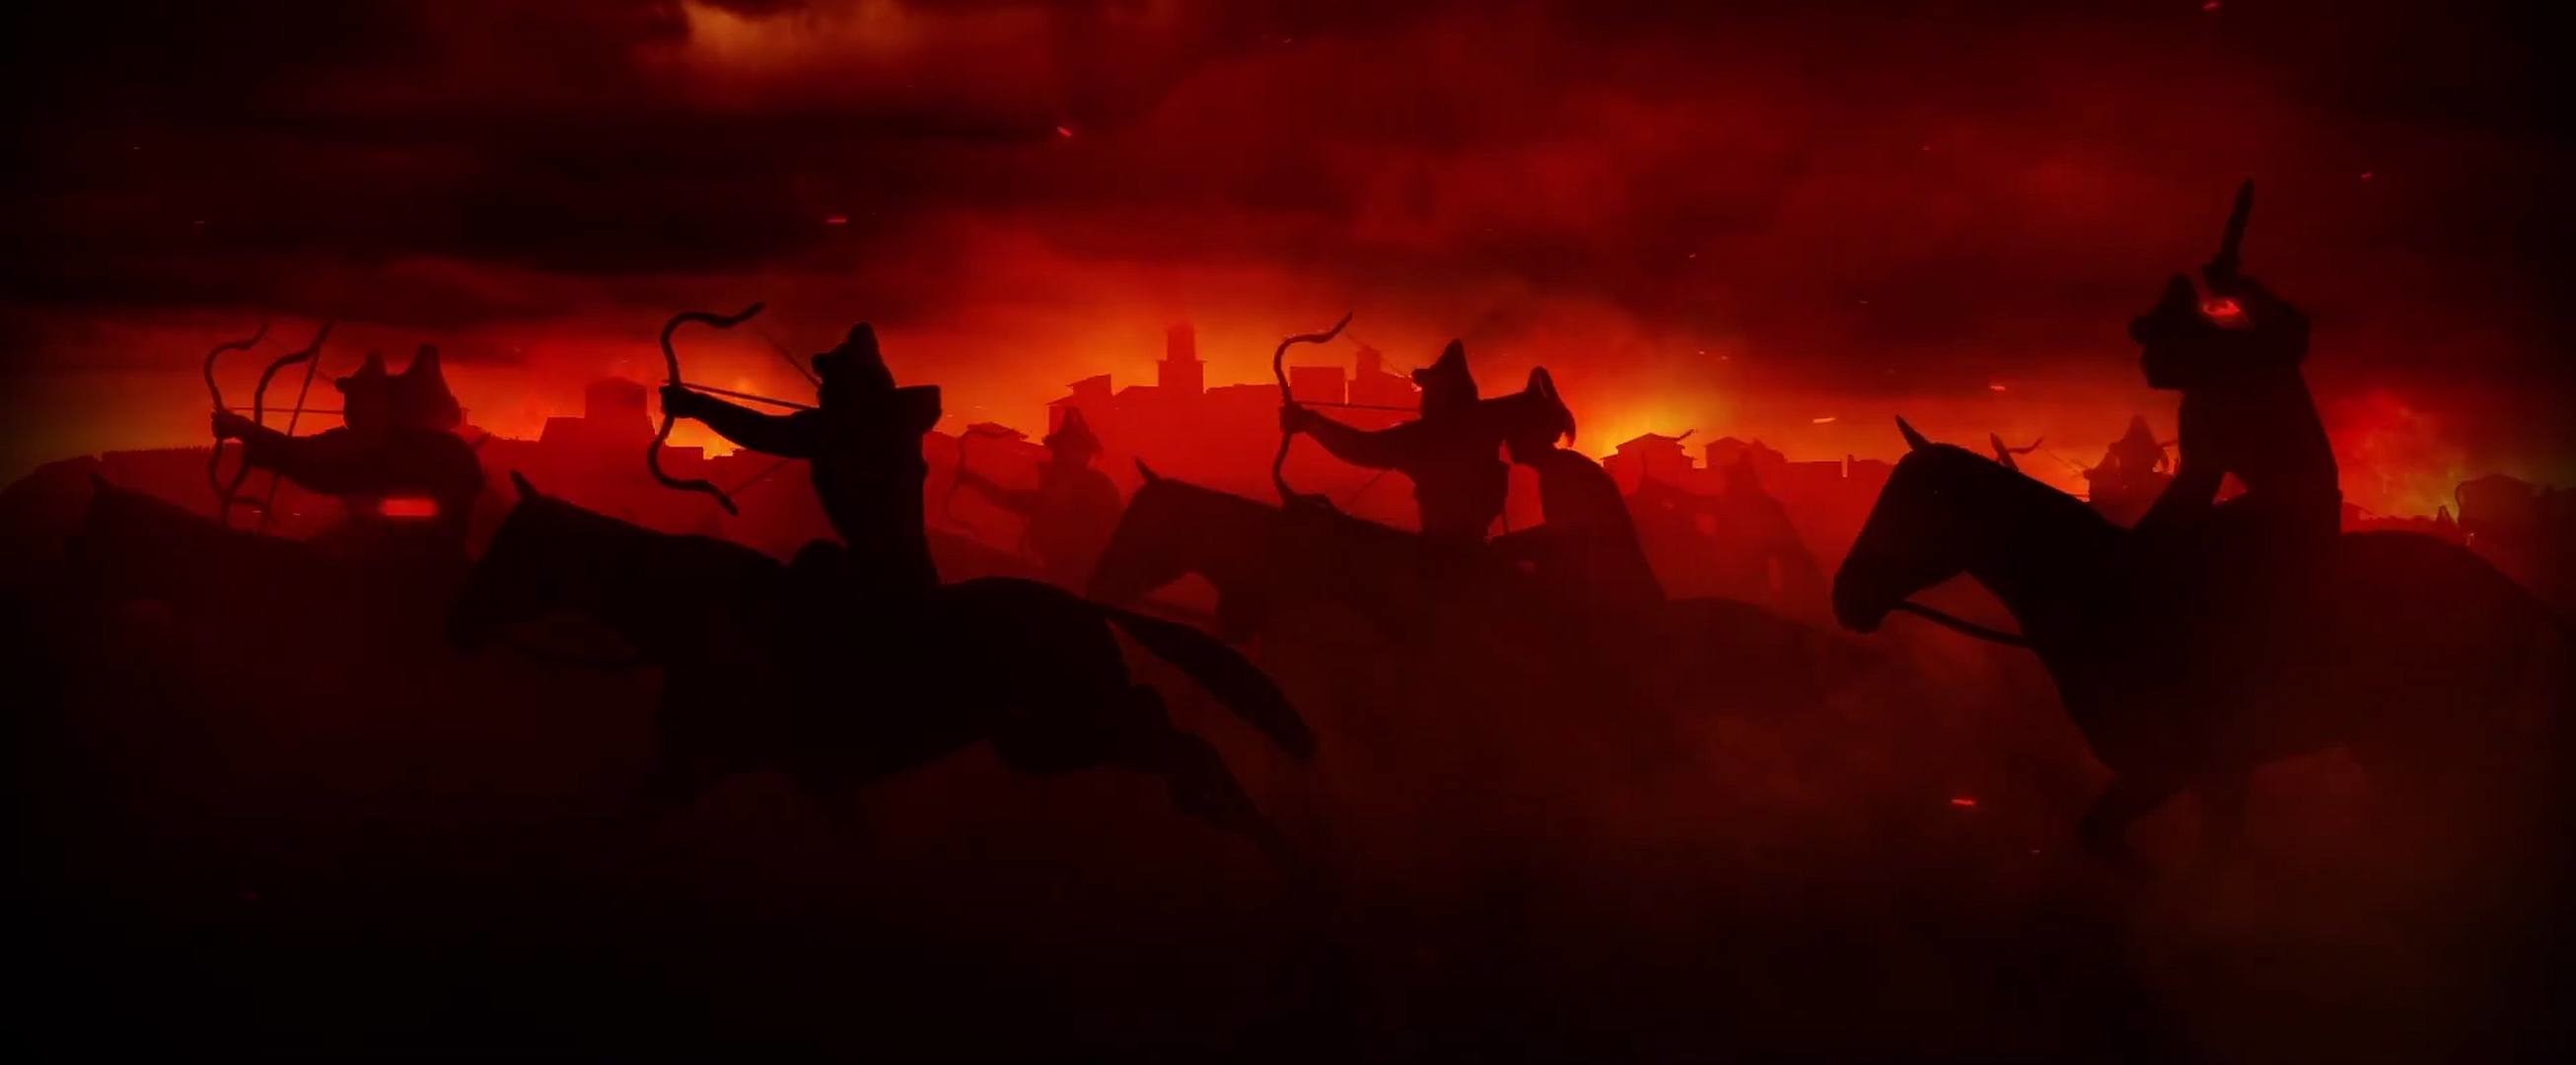 2612x1080 Watch The New Total War: Attila Cinematic Trailer | Entertainment .